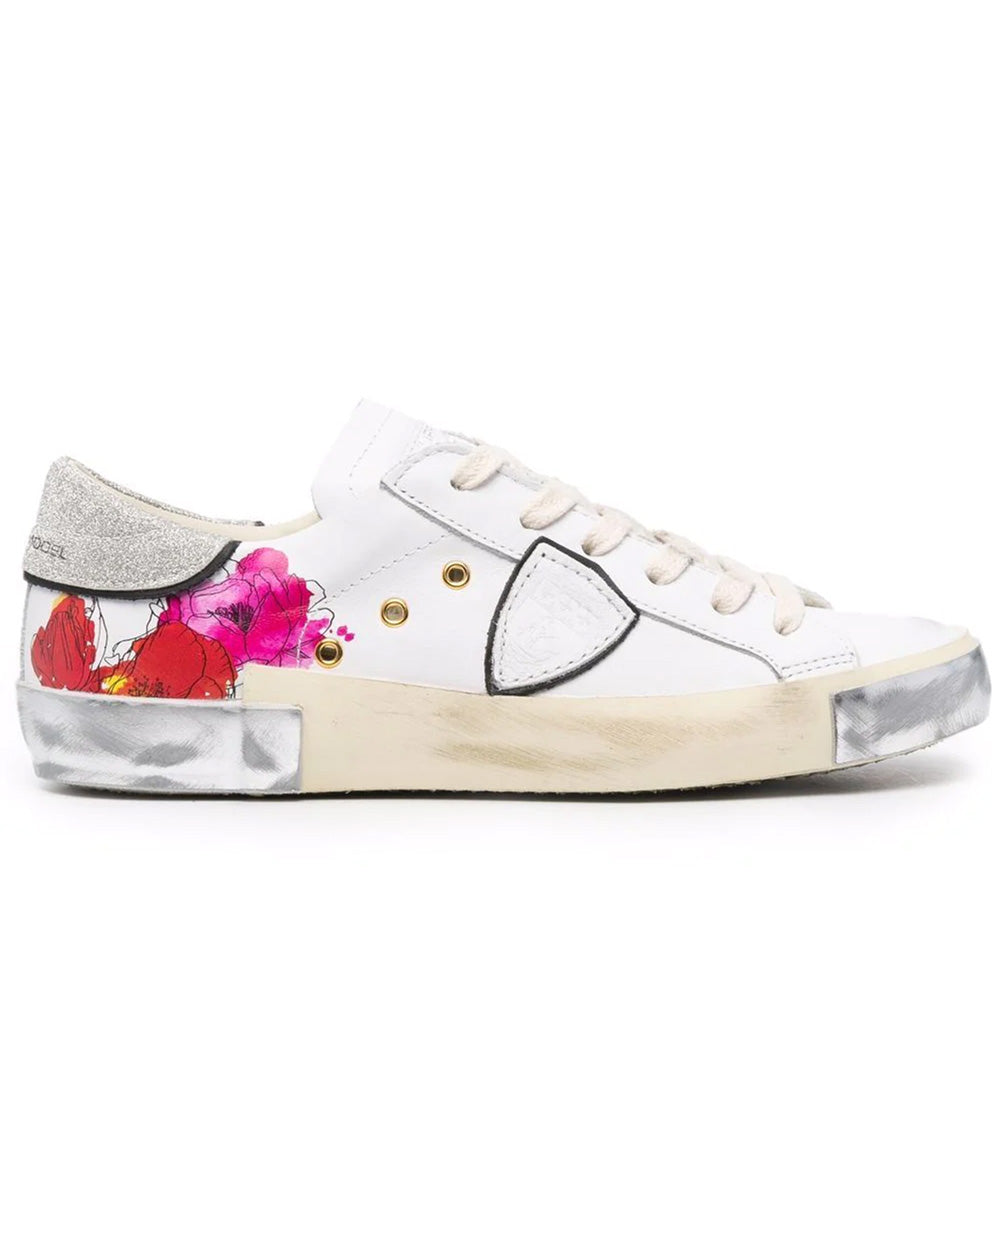 Flower Print Prsx Sneakers in White